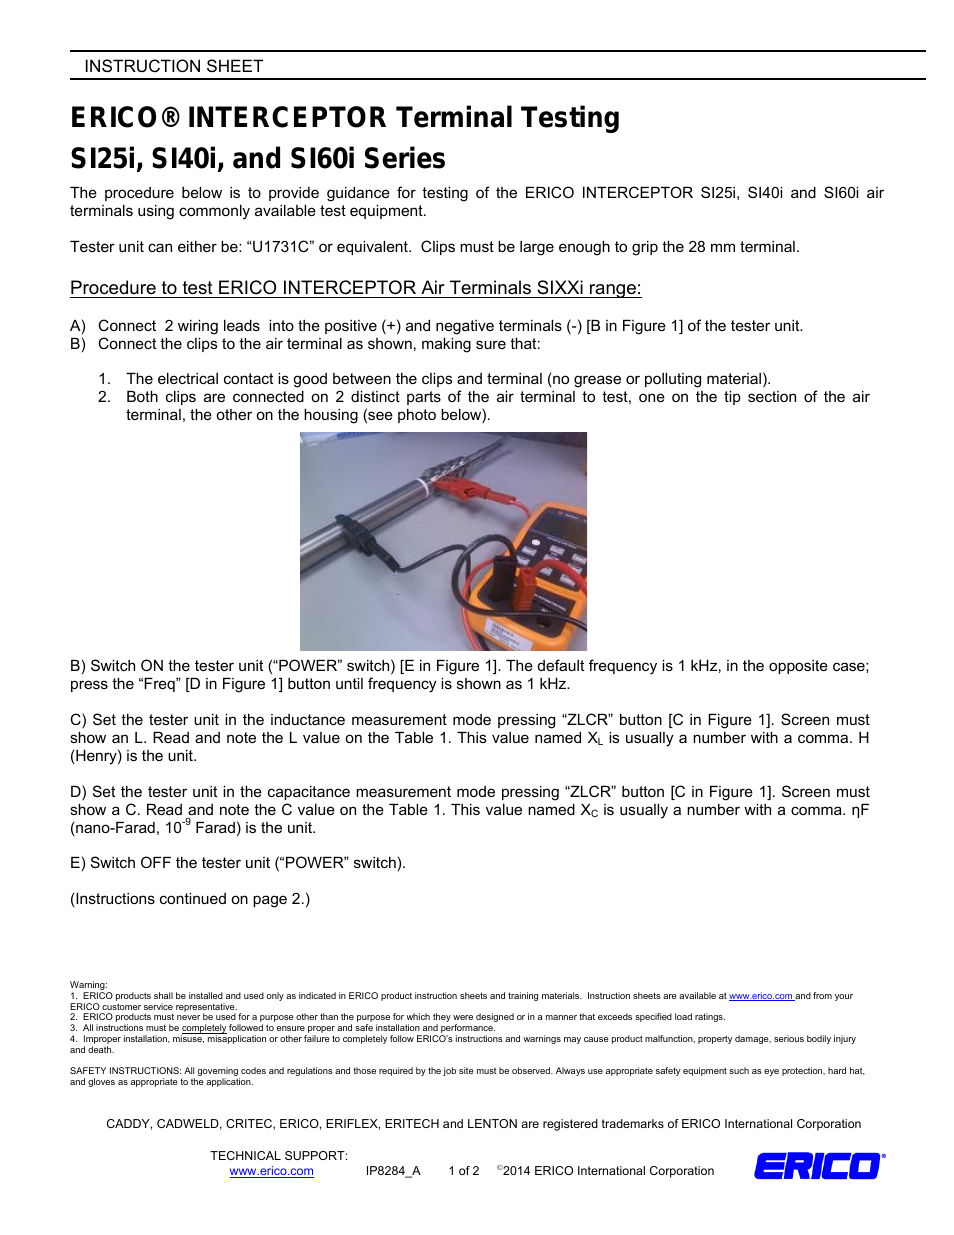 SI60i Series ERICO INTERCEPTOR Terminal Testing